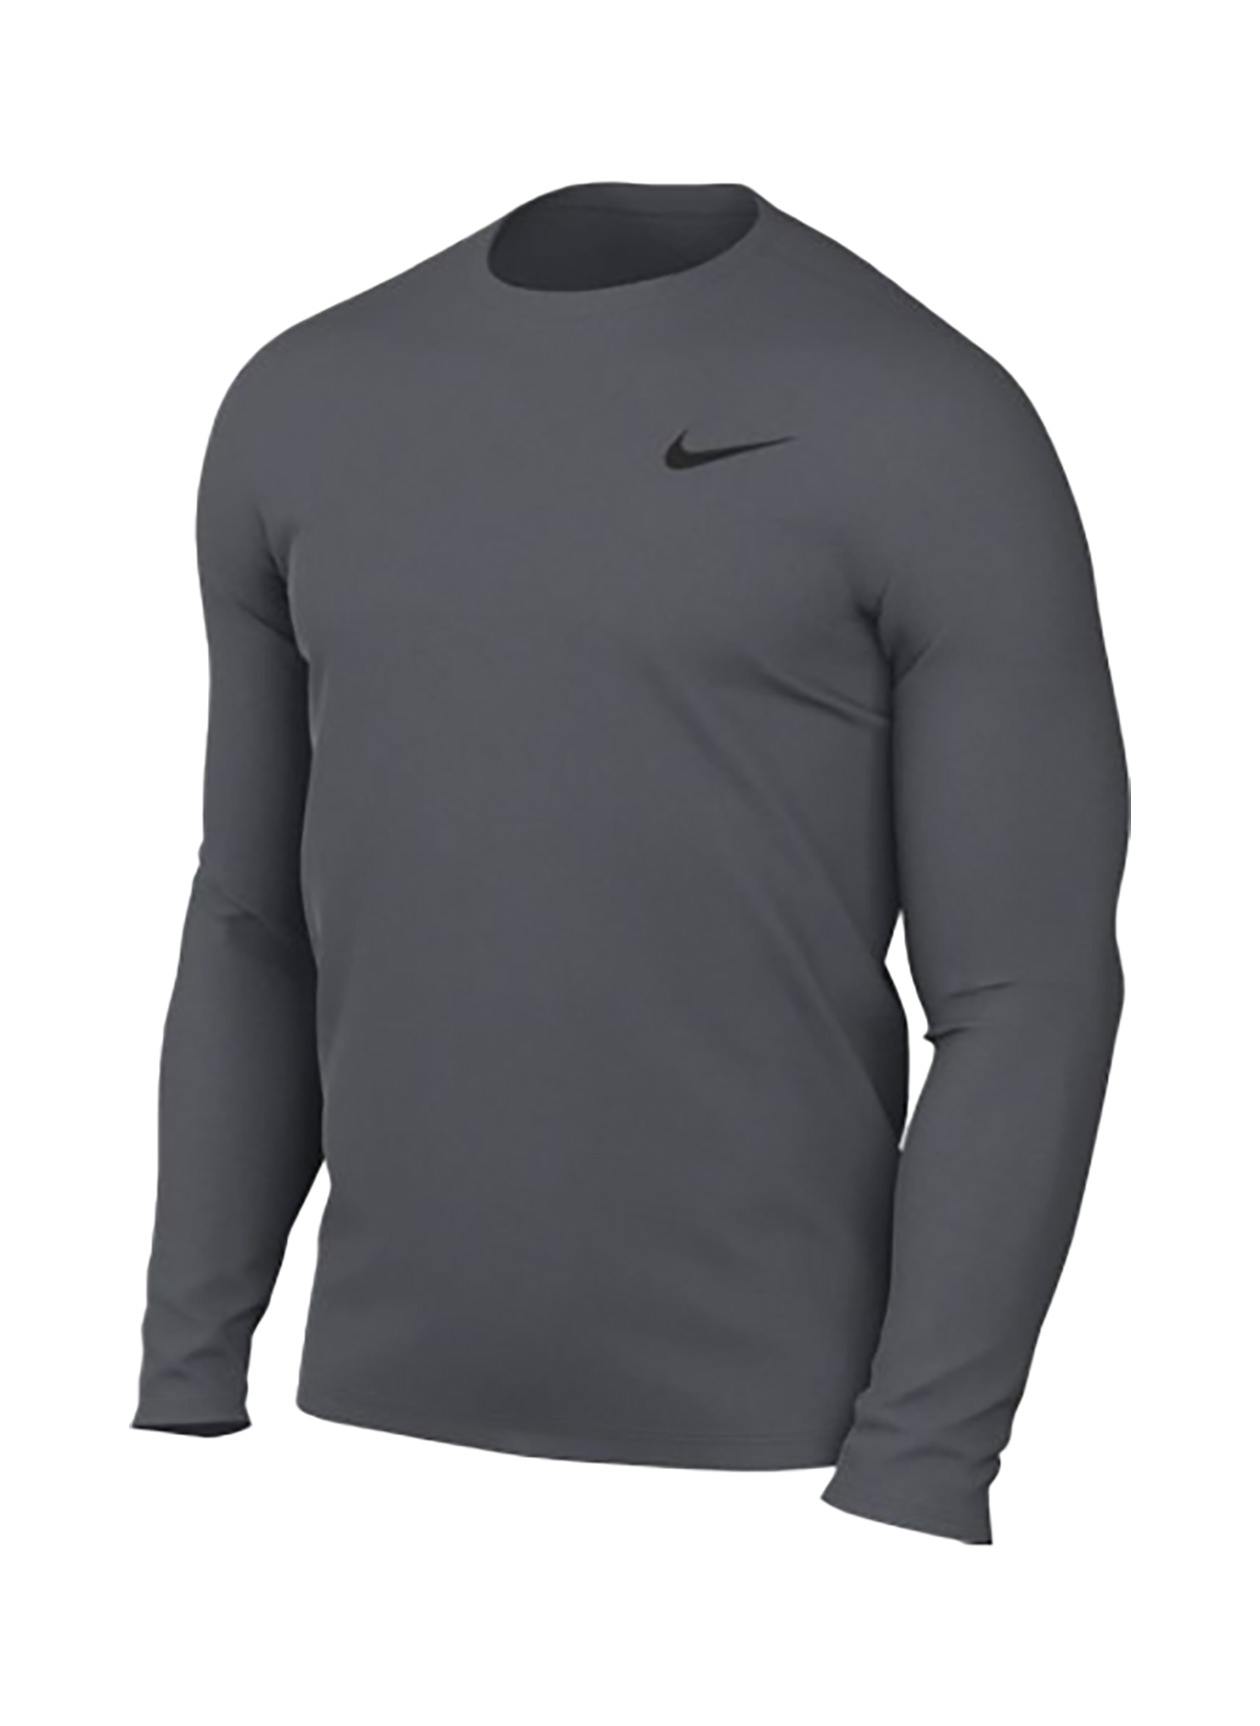 Men\'s Crew Long-Sleeve Carbon Nike Heather T-Shirt Customized Legend